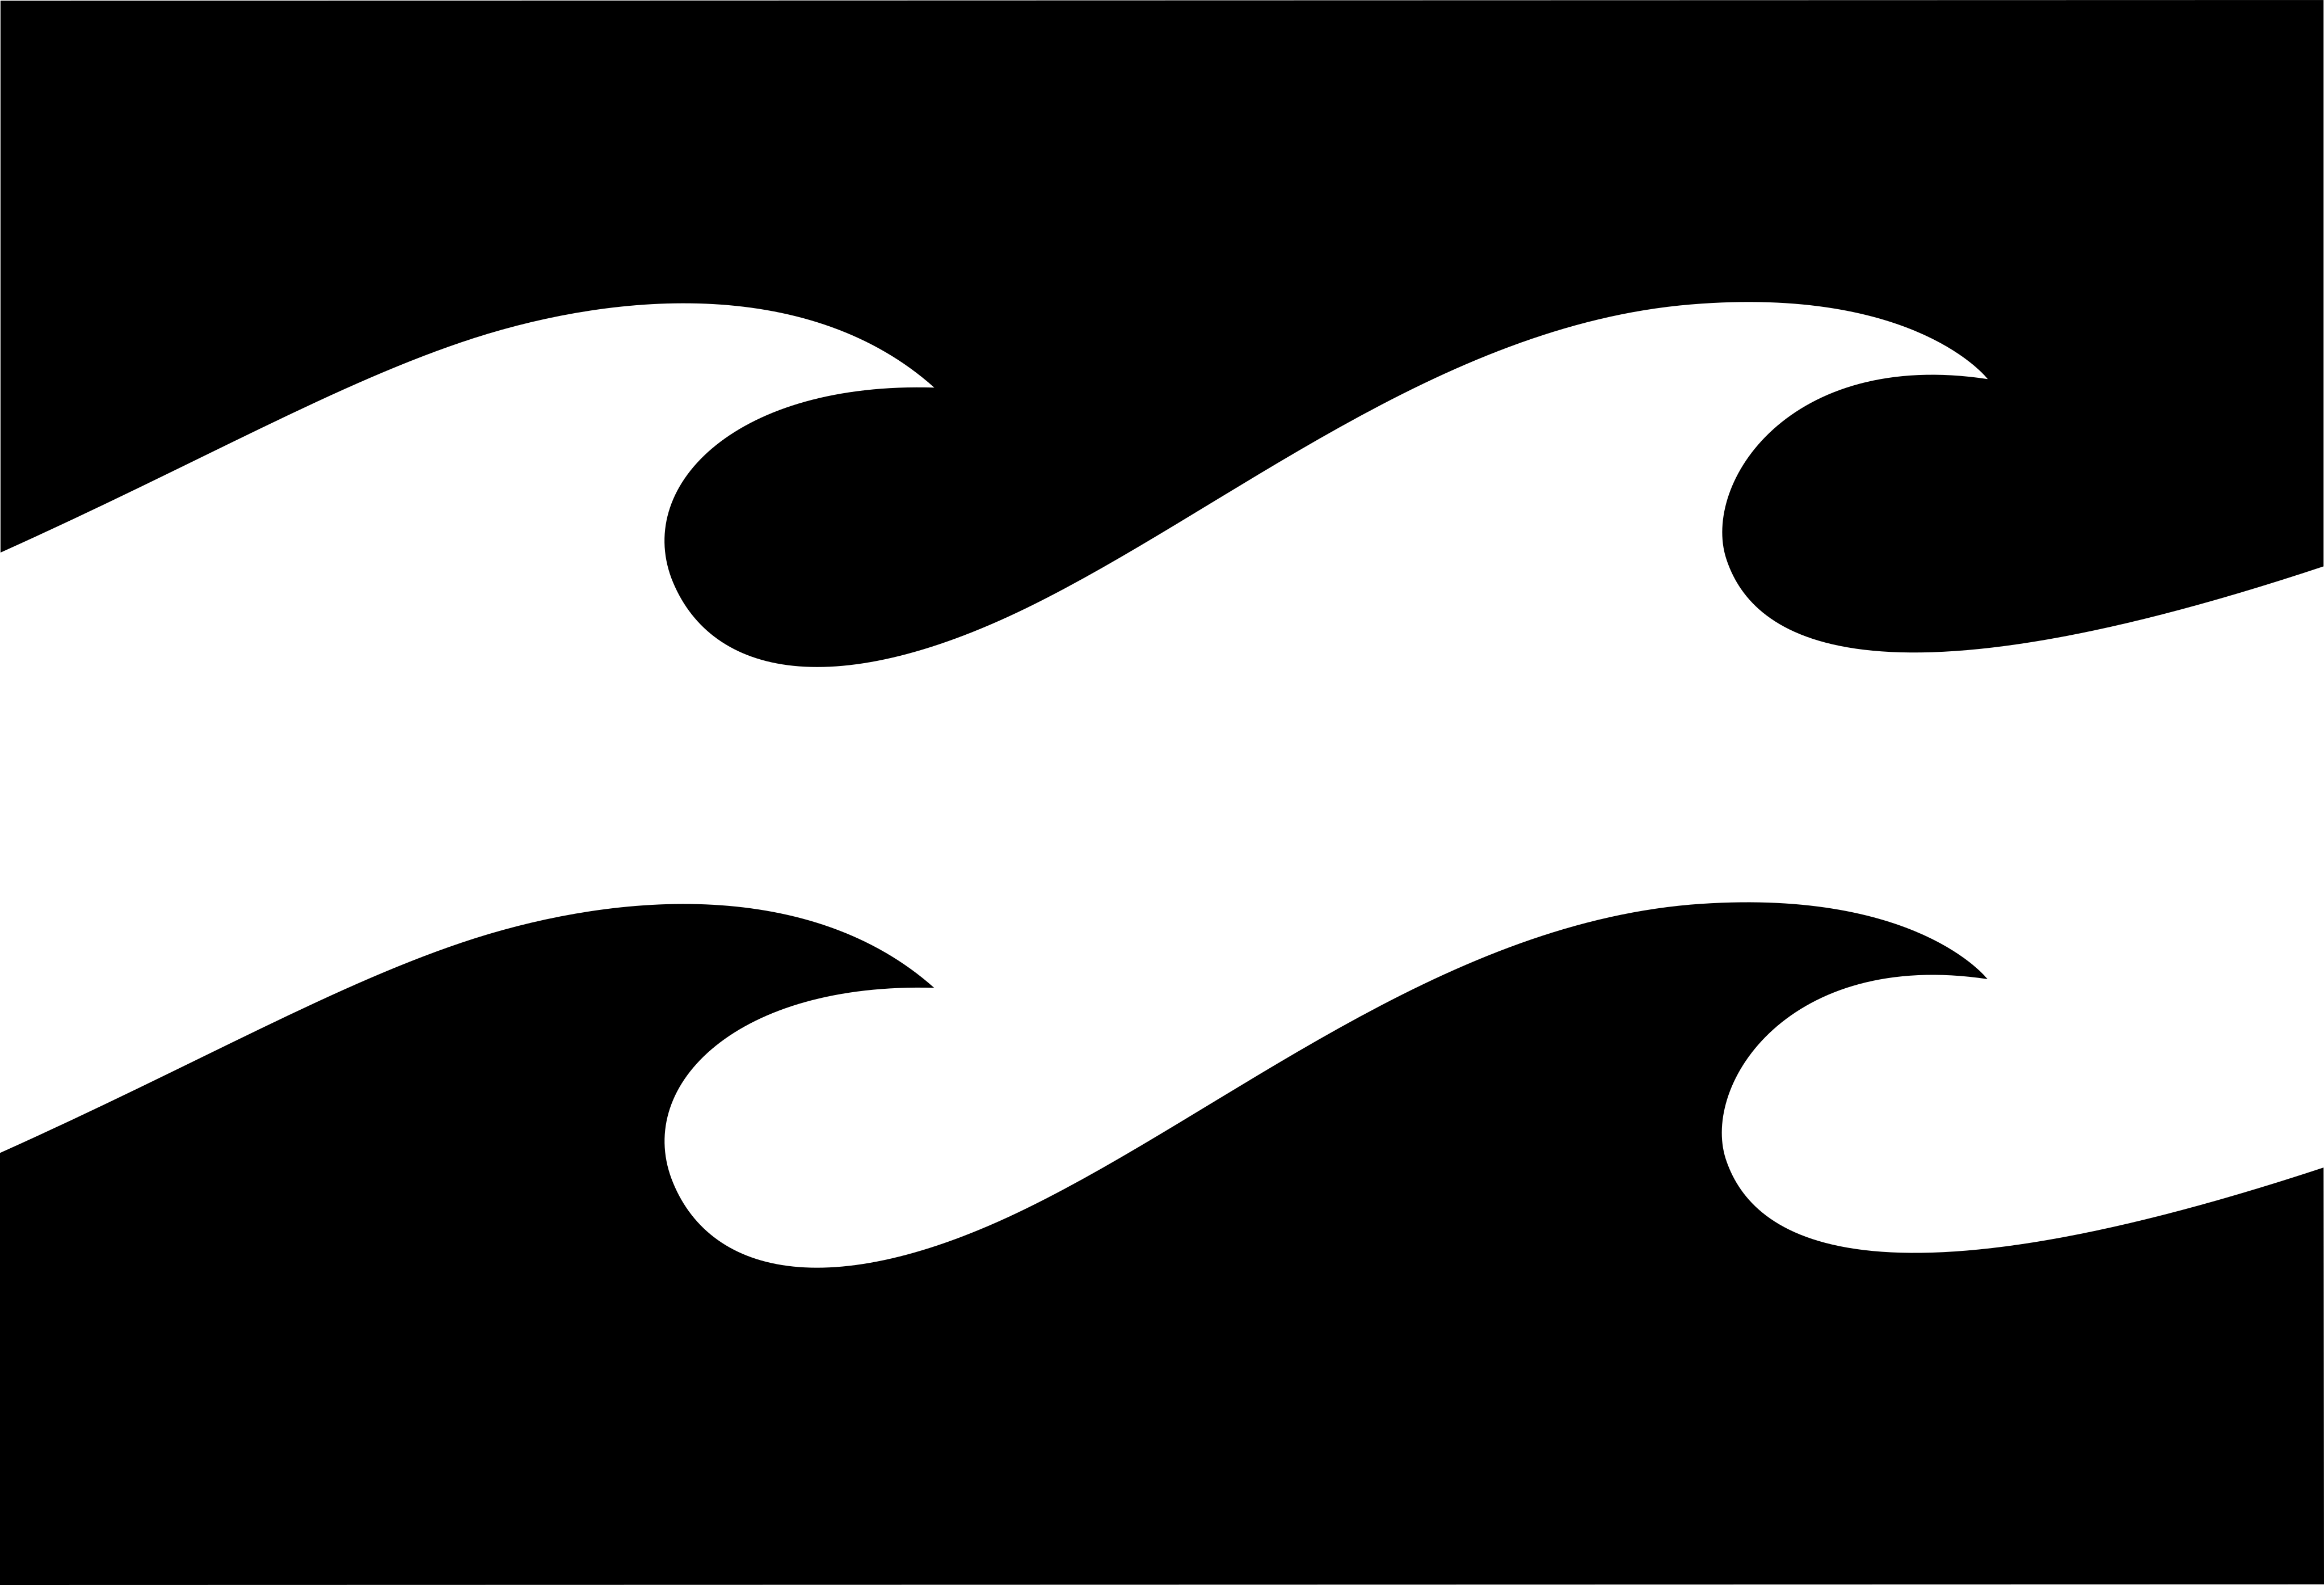 billabong logo 1 - Billabong Logo